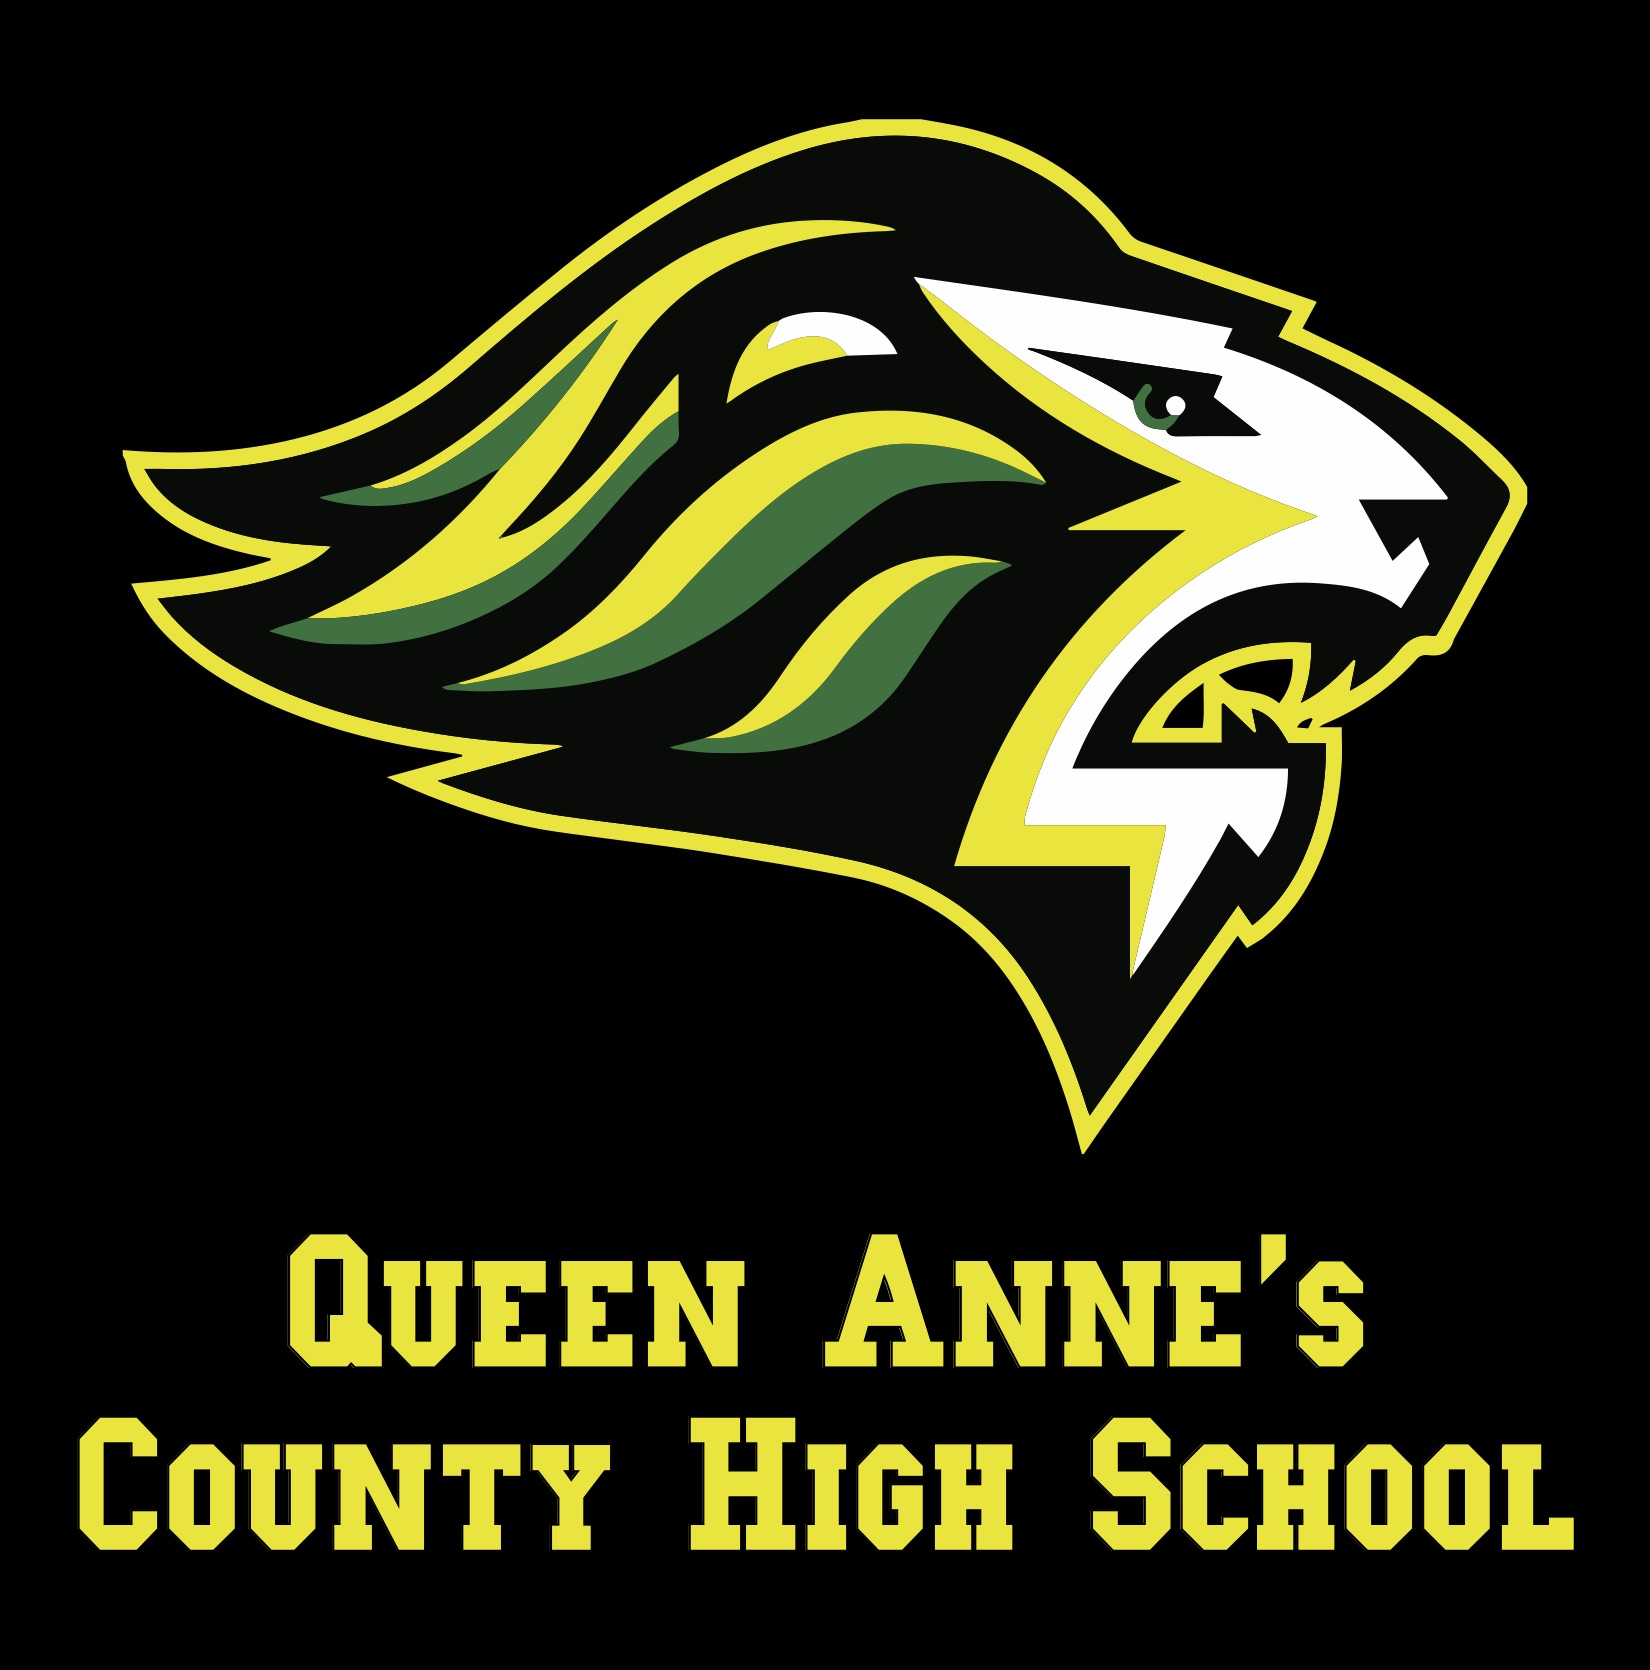 Queen Anne’s County High School